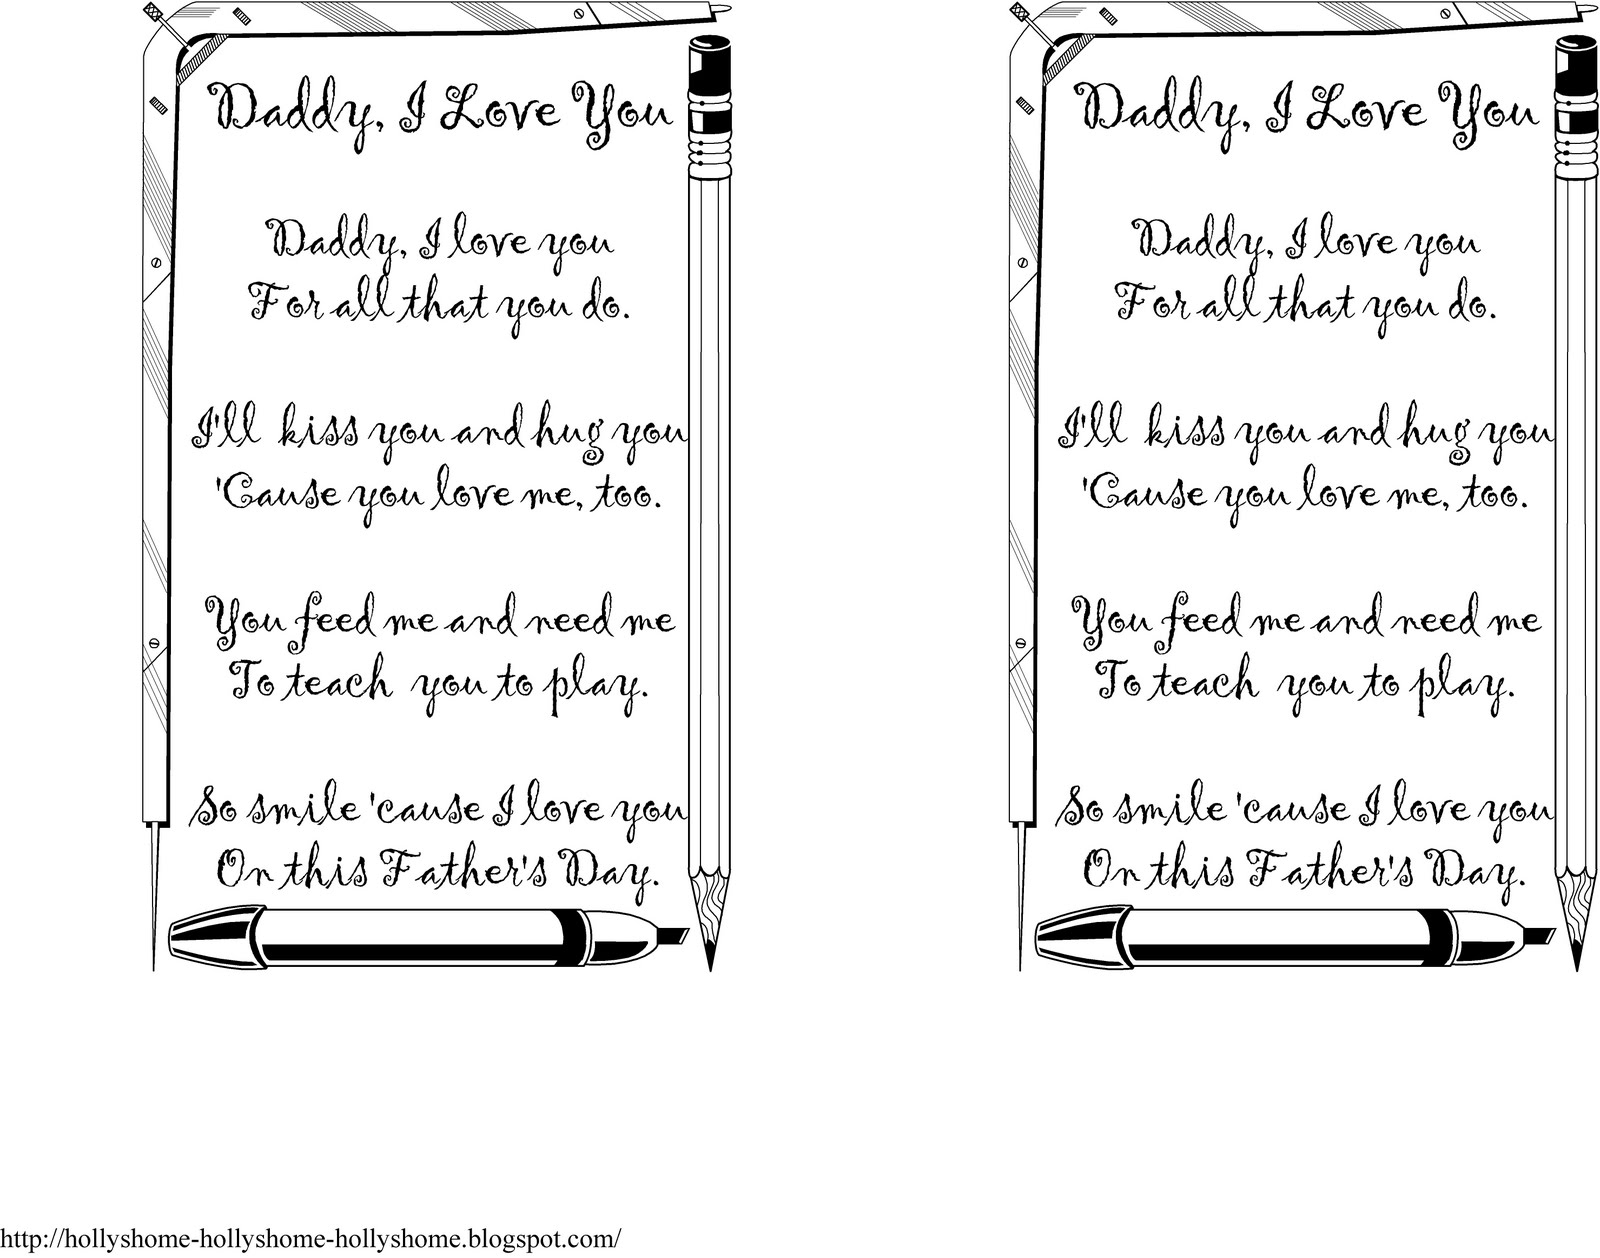 HollysHome - Church Fun: Father's Day Poem